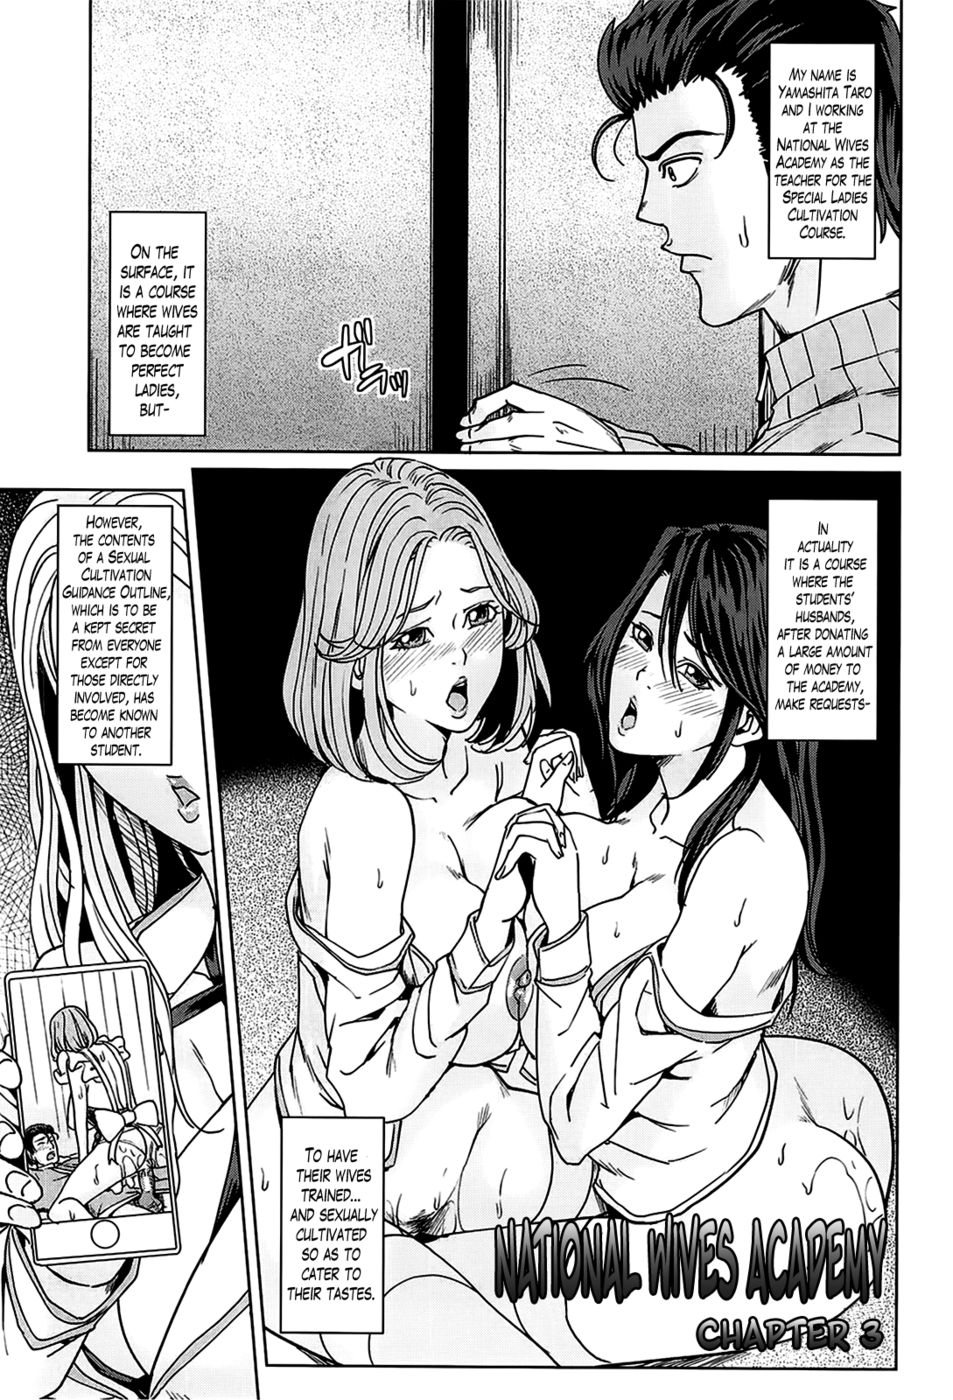 Hentai Manga Comic-National Wives Academy-Chapter 3-1